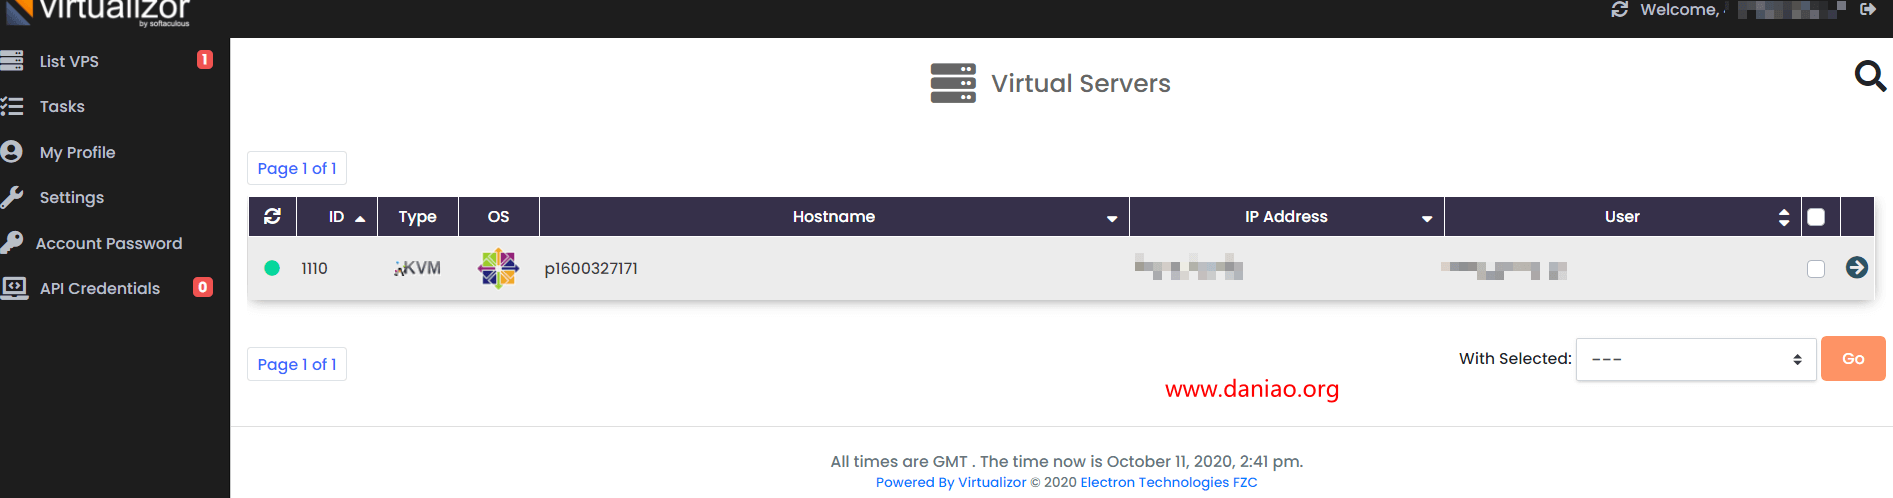 Pacificrack VPS新控制面板Virtualizor使用指南：查看VNC密码/修改root密码/重装系统